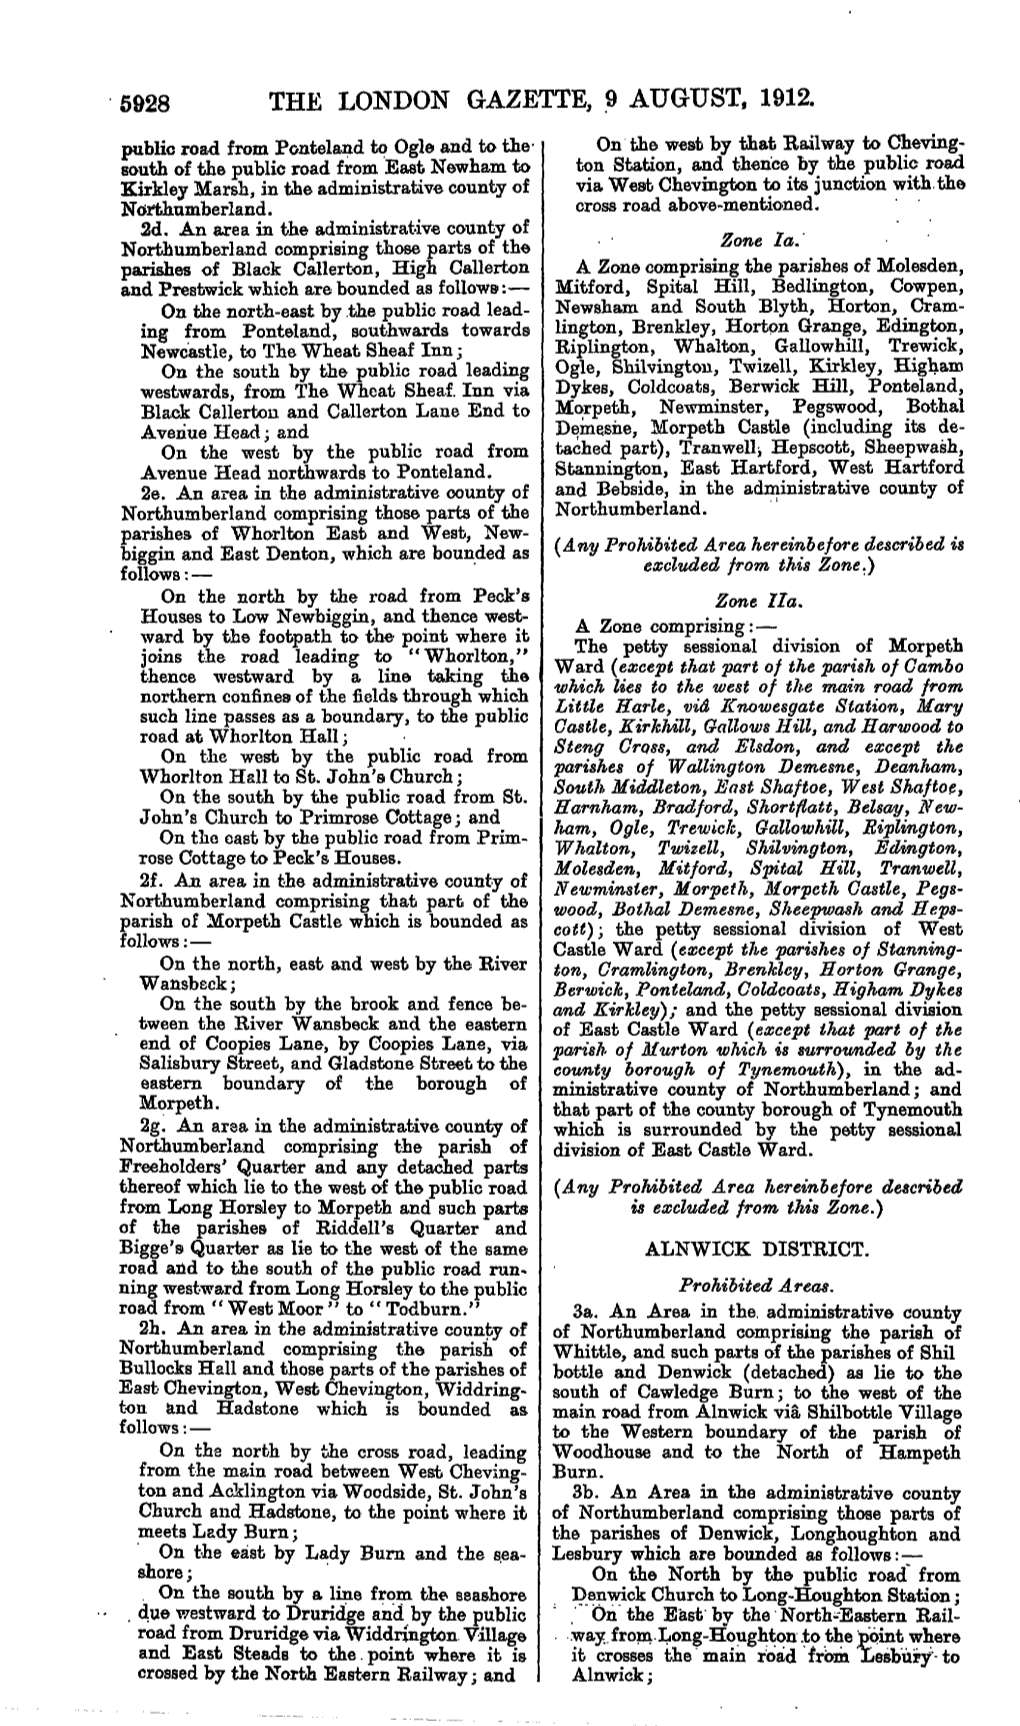 5928 the London Gazette, 9 August, 1912